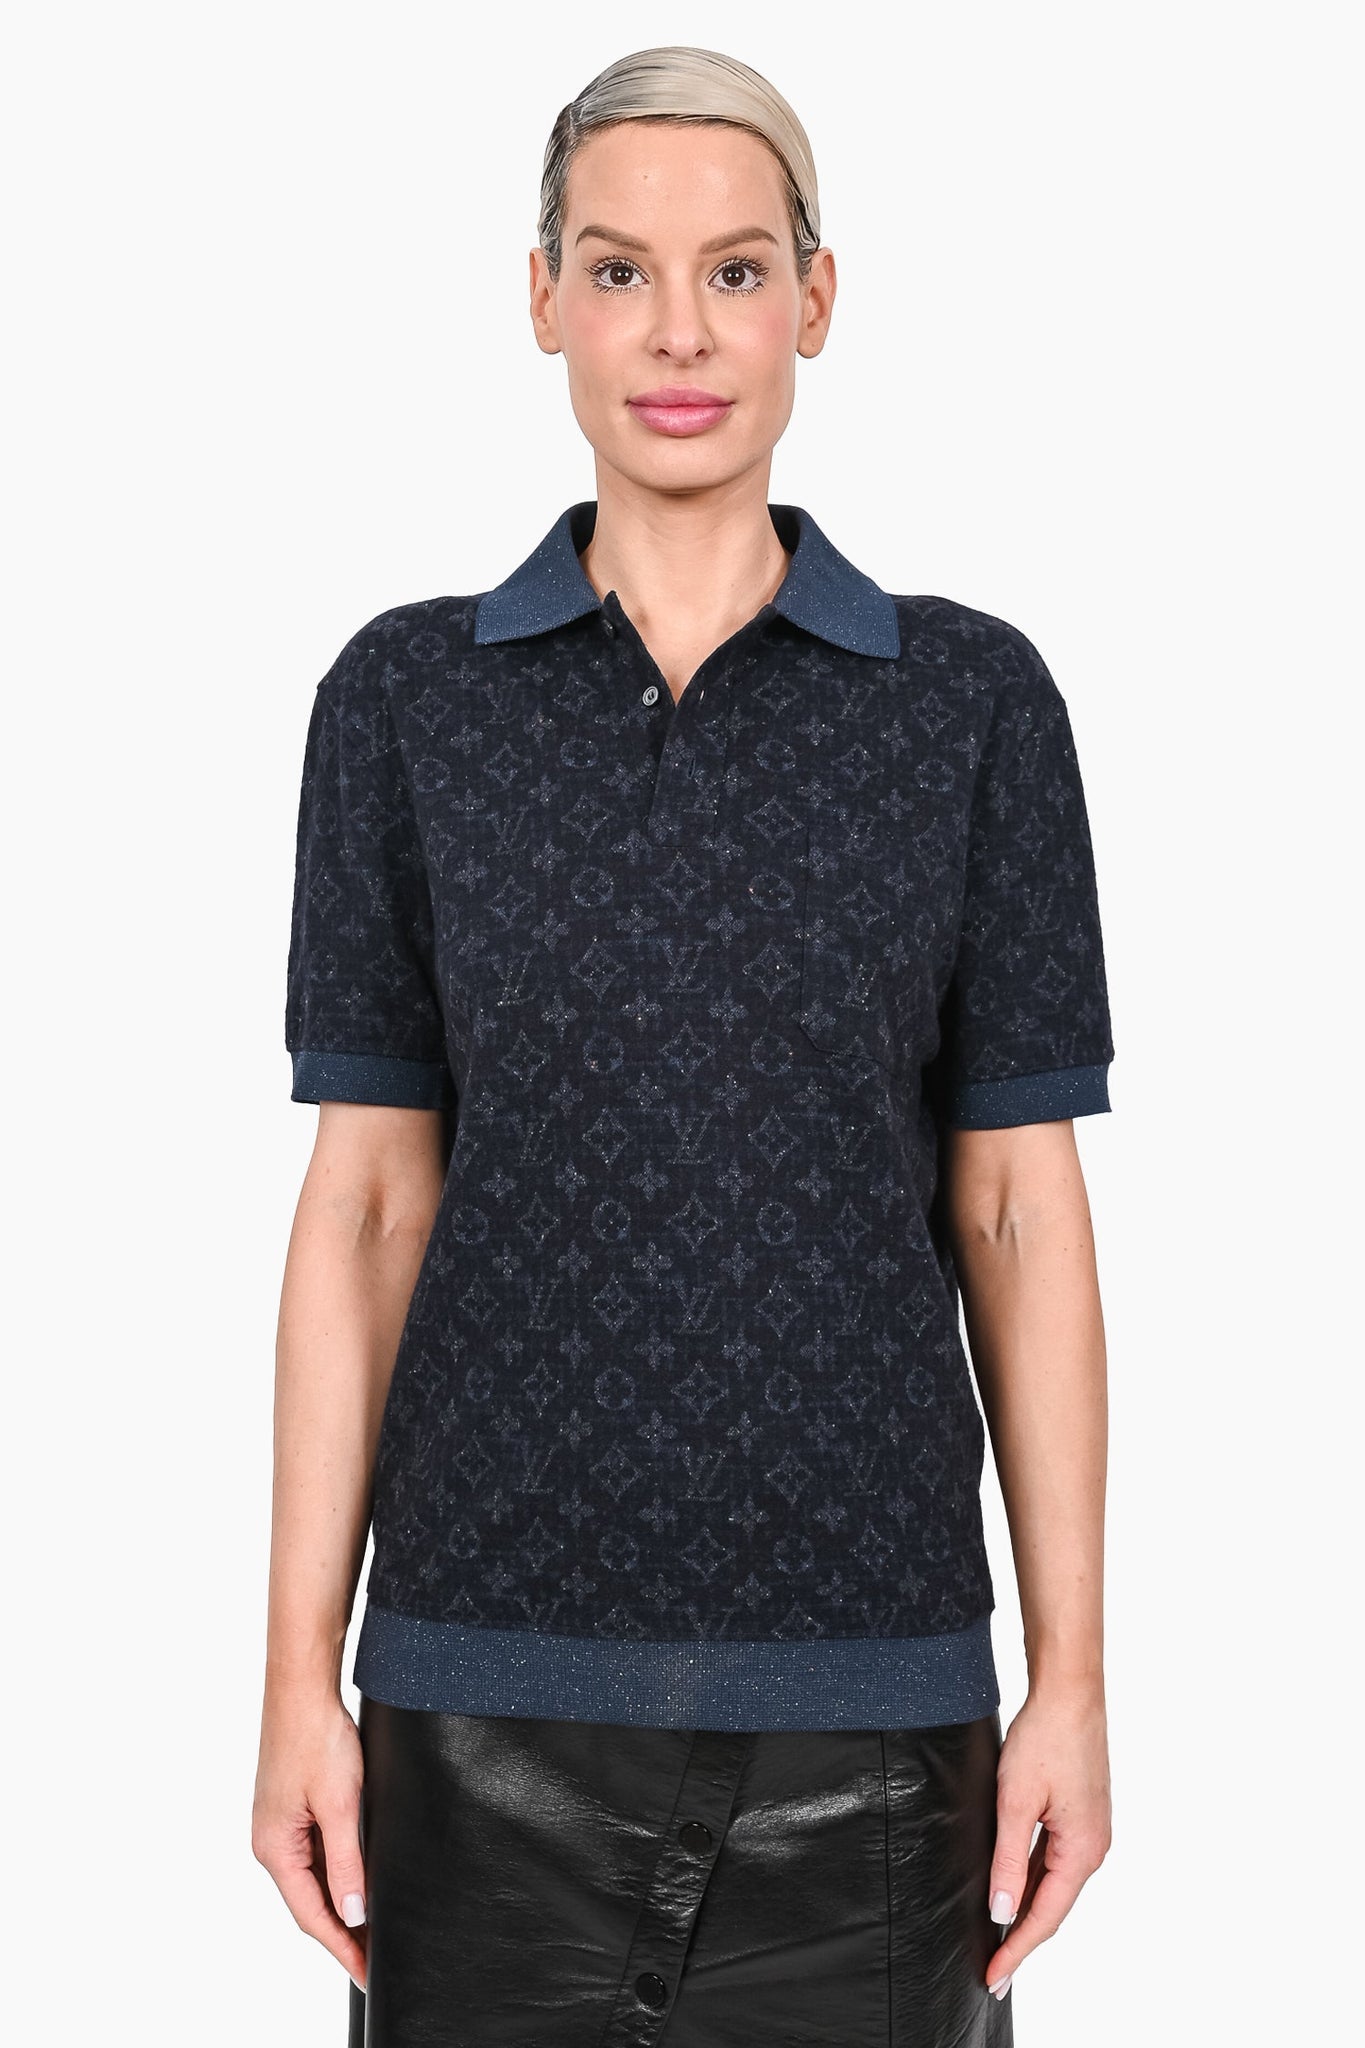 Louis Vuitton Navy Blue Monogram Wool/Silk/Cotton S/S Polo Top sz L Mens